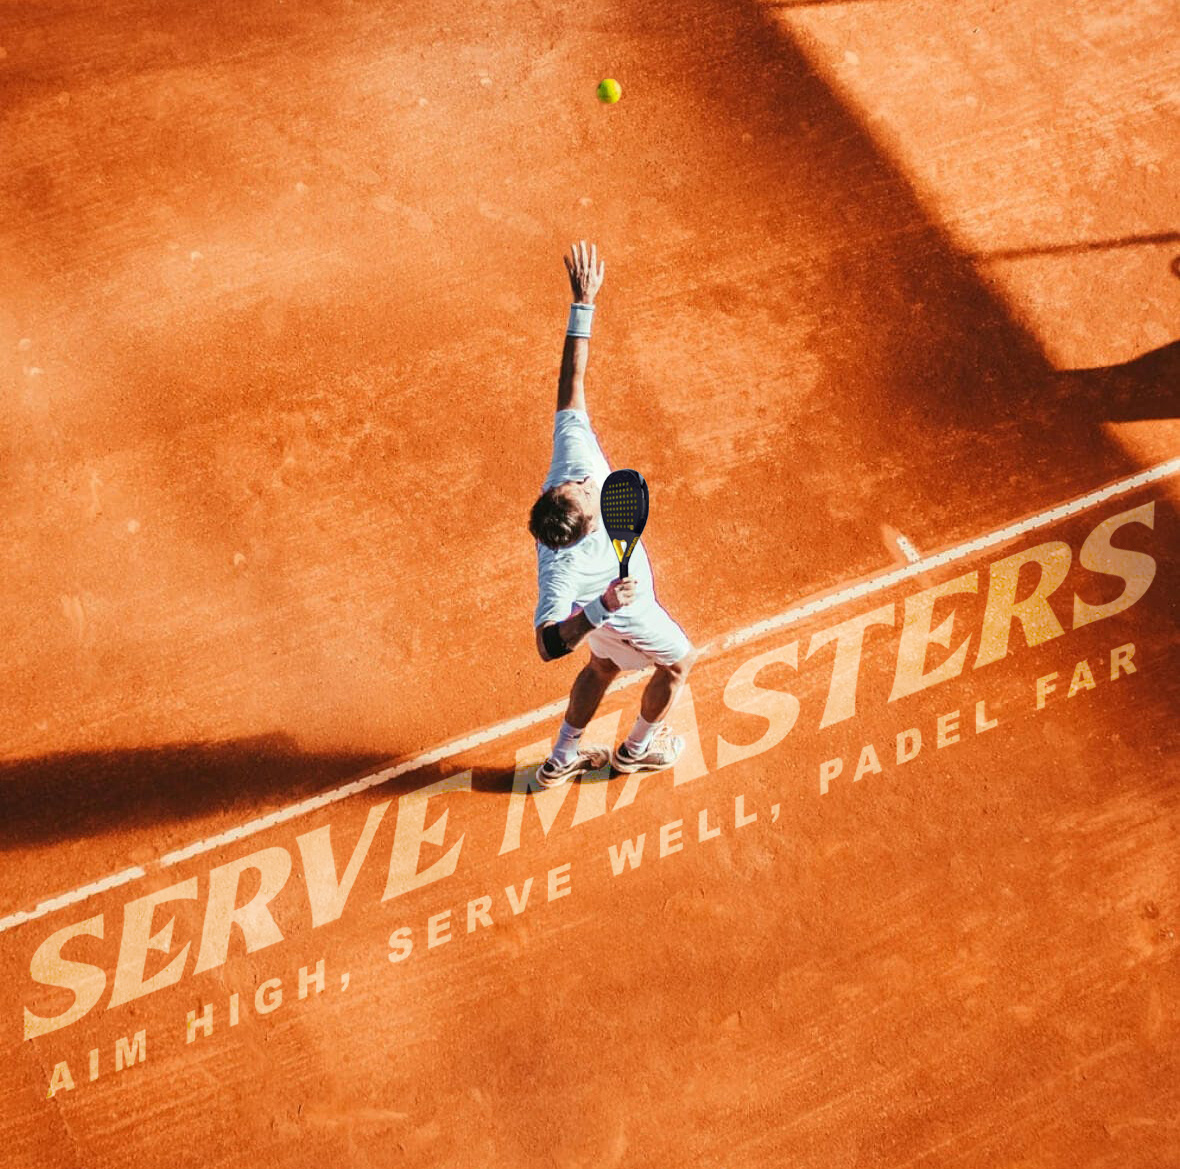 Padel Padel tennis padel logo sports Logo Design brand identity visual Brand Design visual identity brand